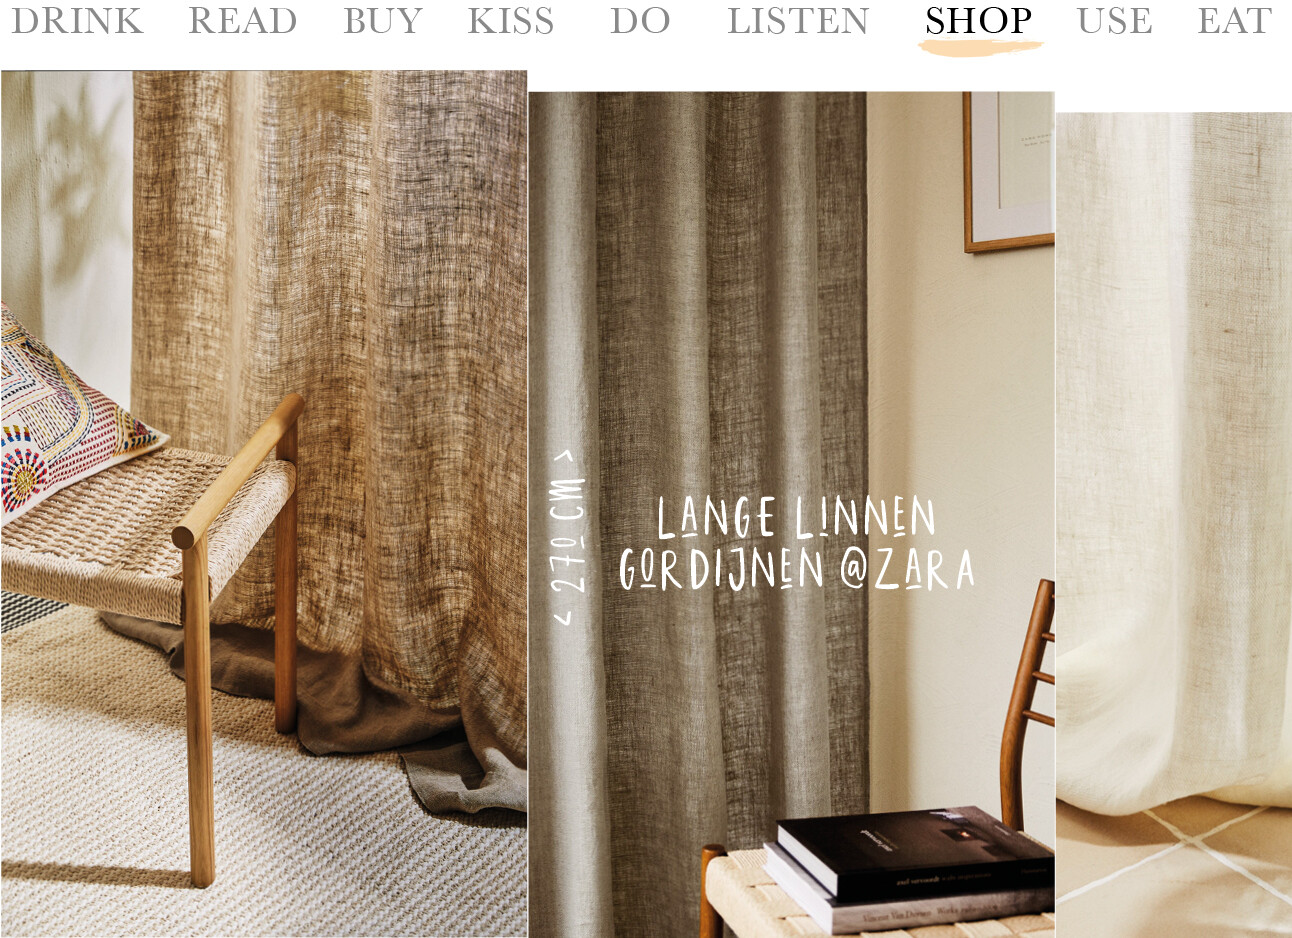 Today we shop: extra lange linnen : Amayzine.com